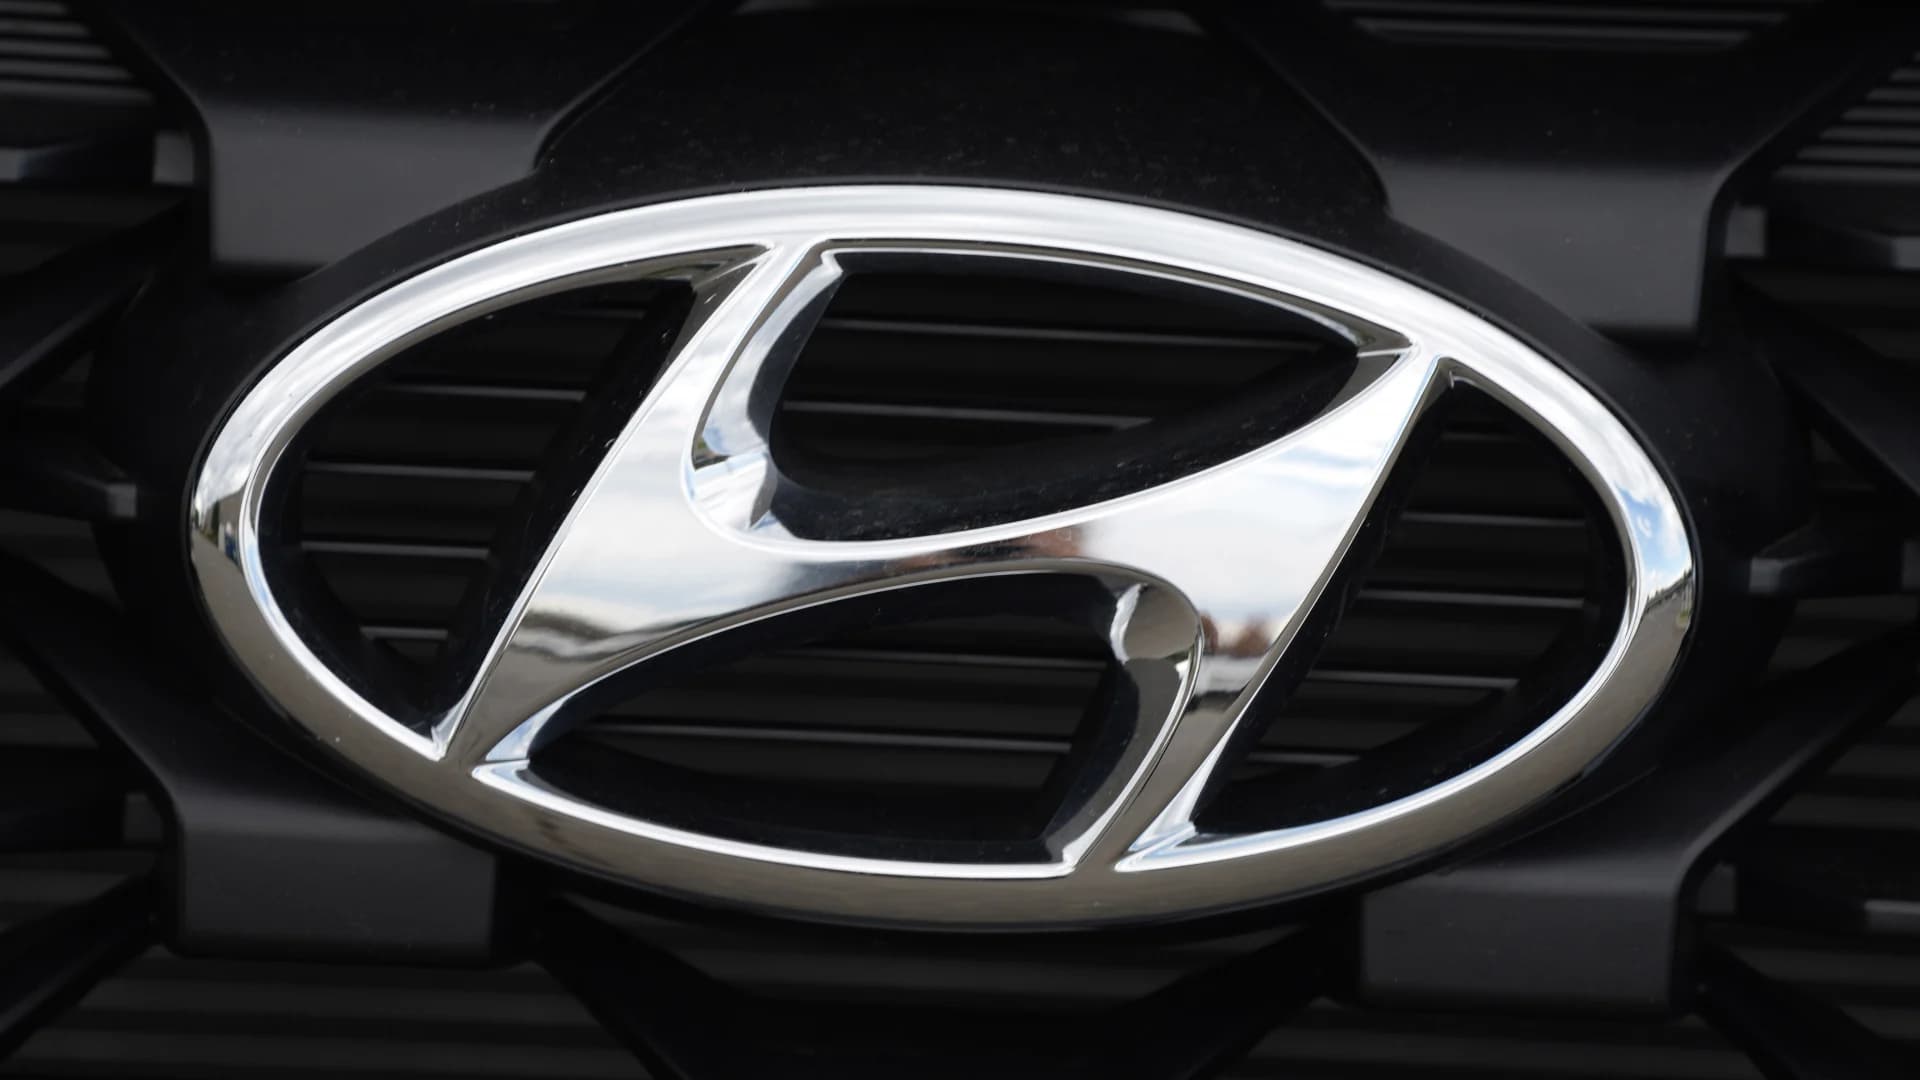 Hyundai-Kia recalls 550K cars, minivans due to turn signal that can flash in wrong direction